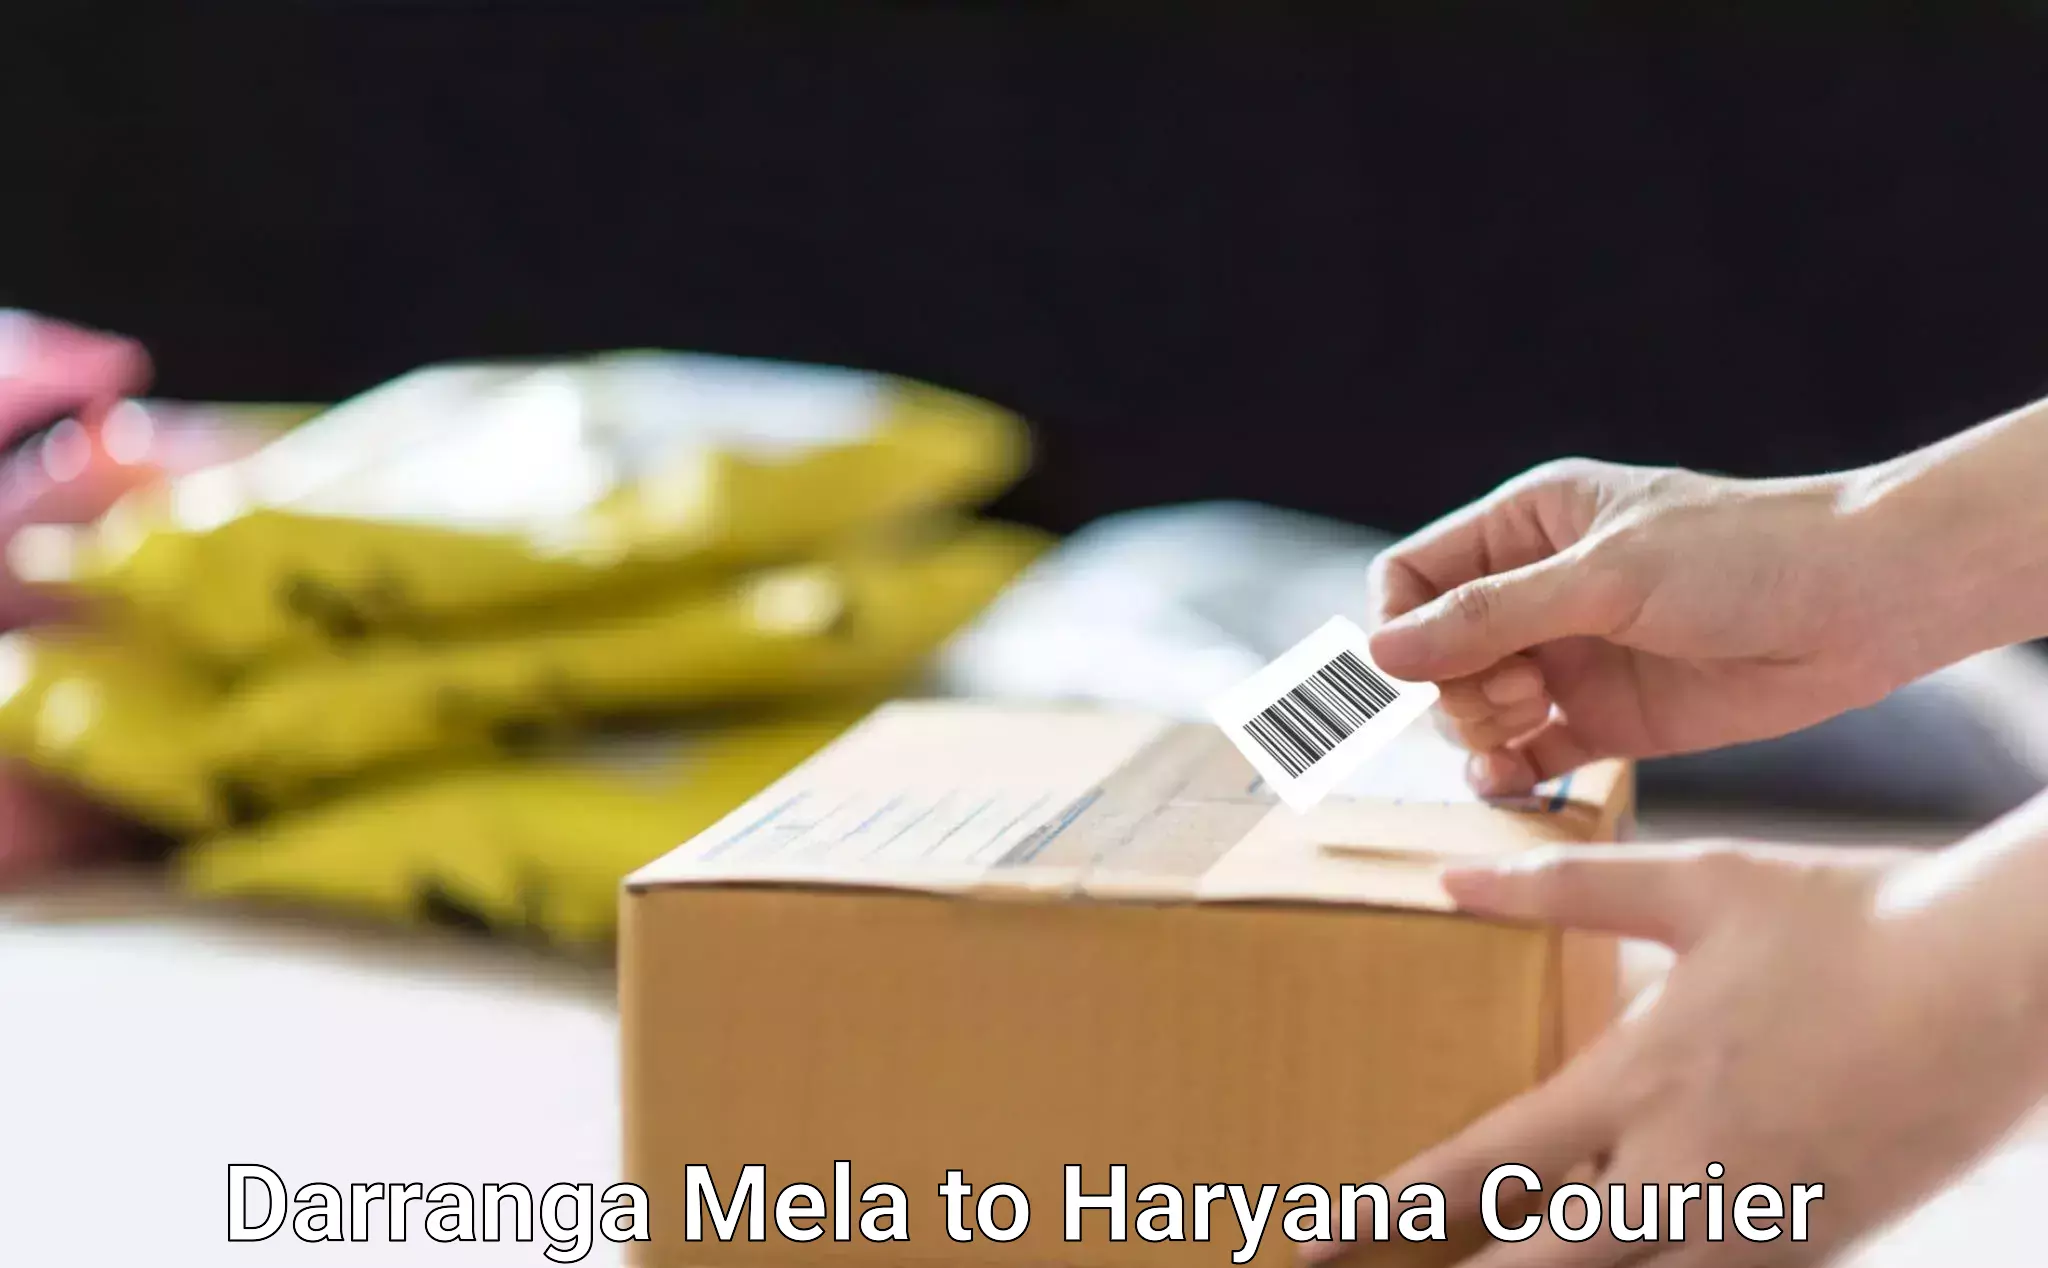 Express delivery network Darranga Mela to Haryana